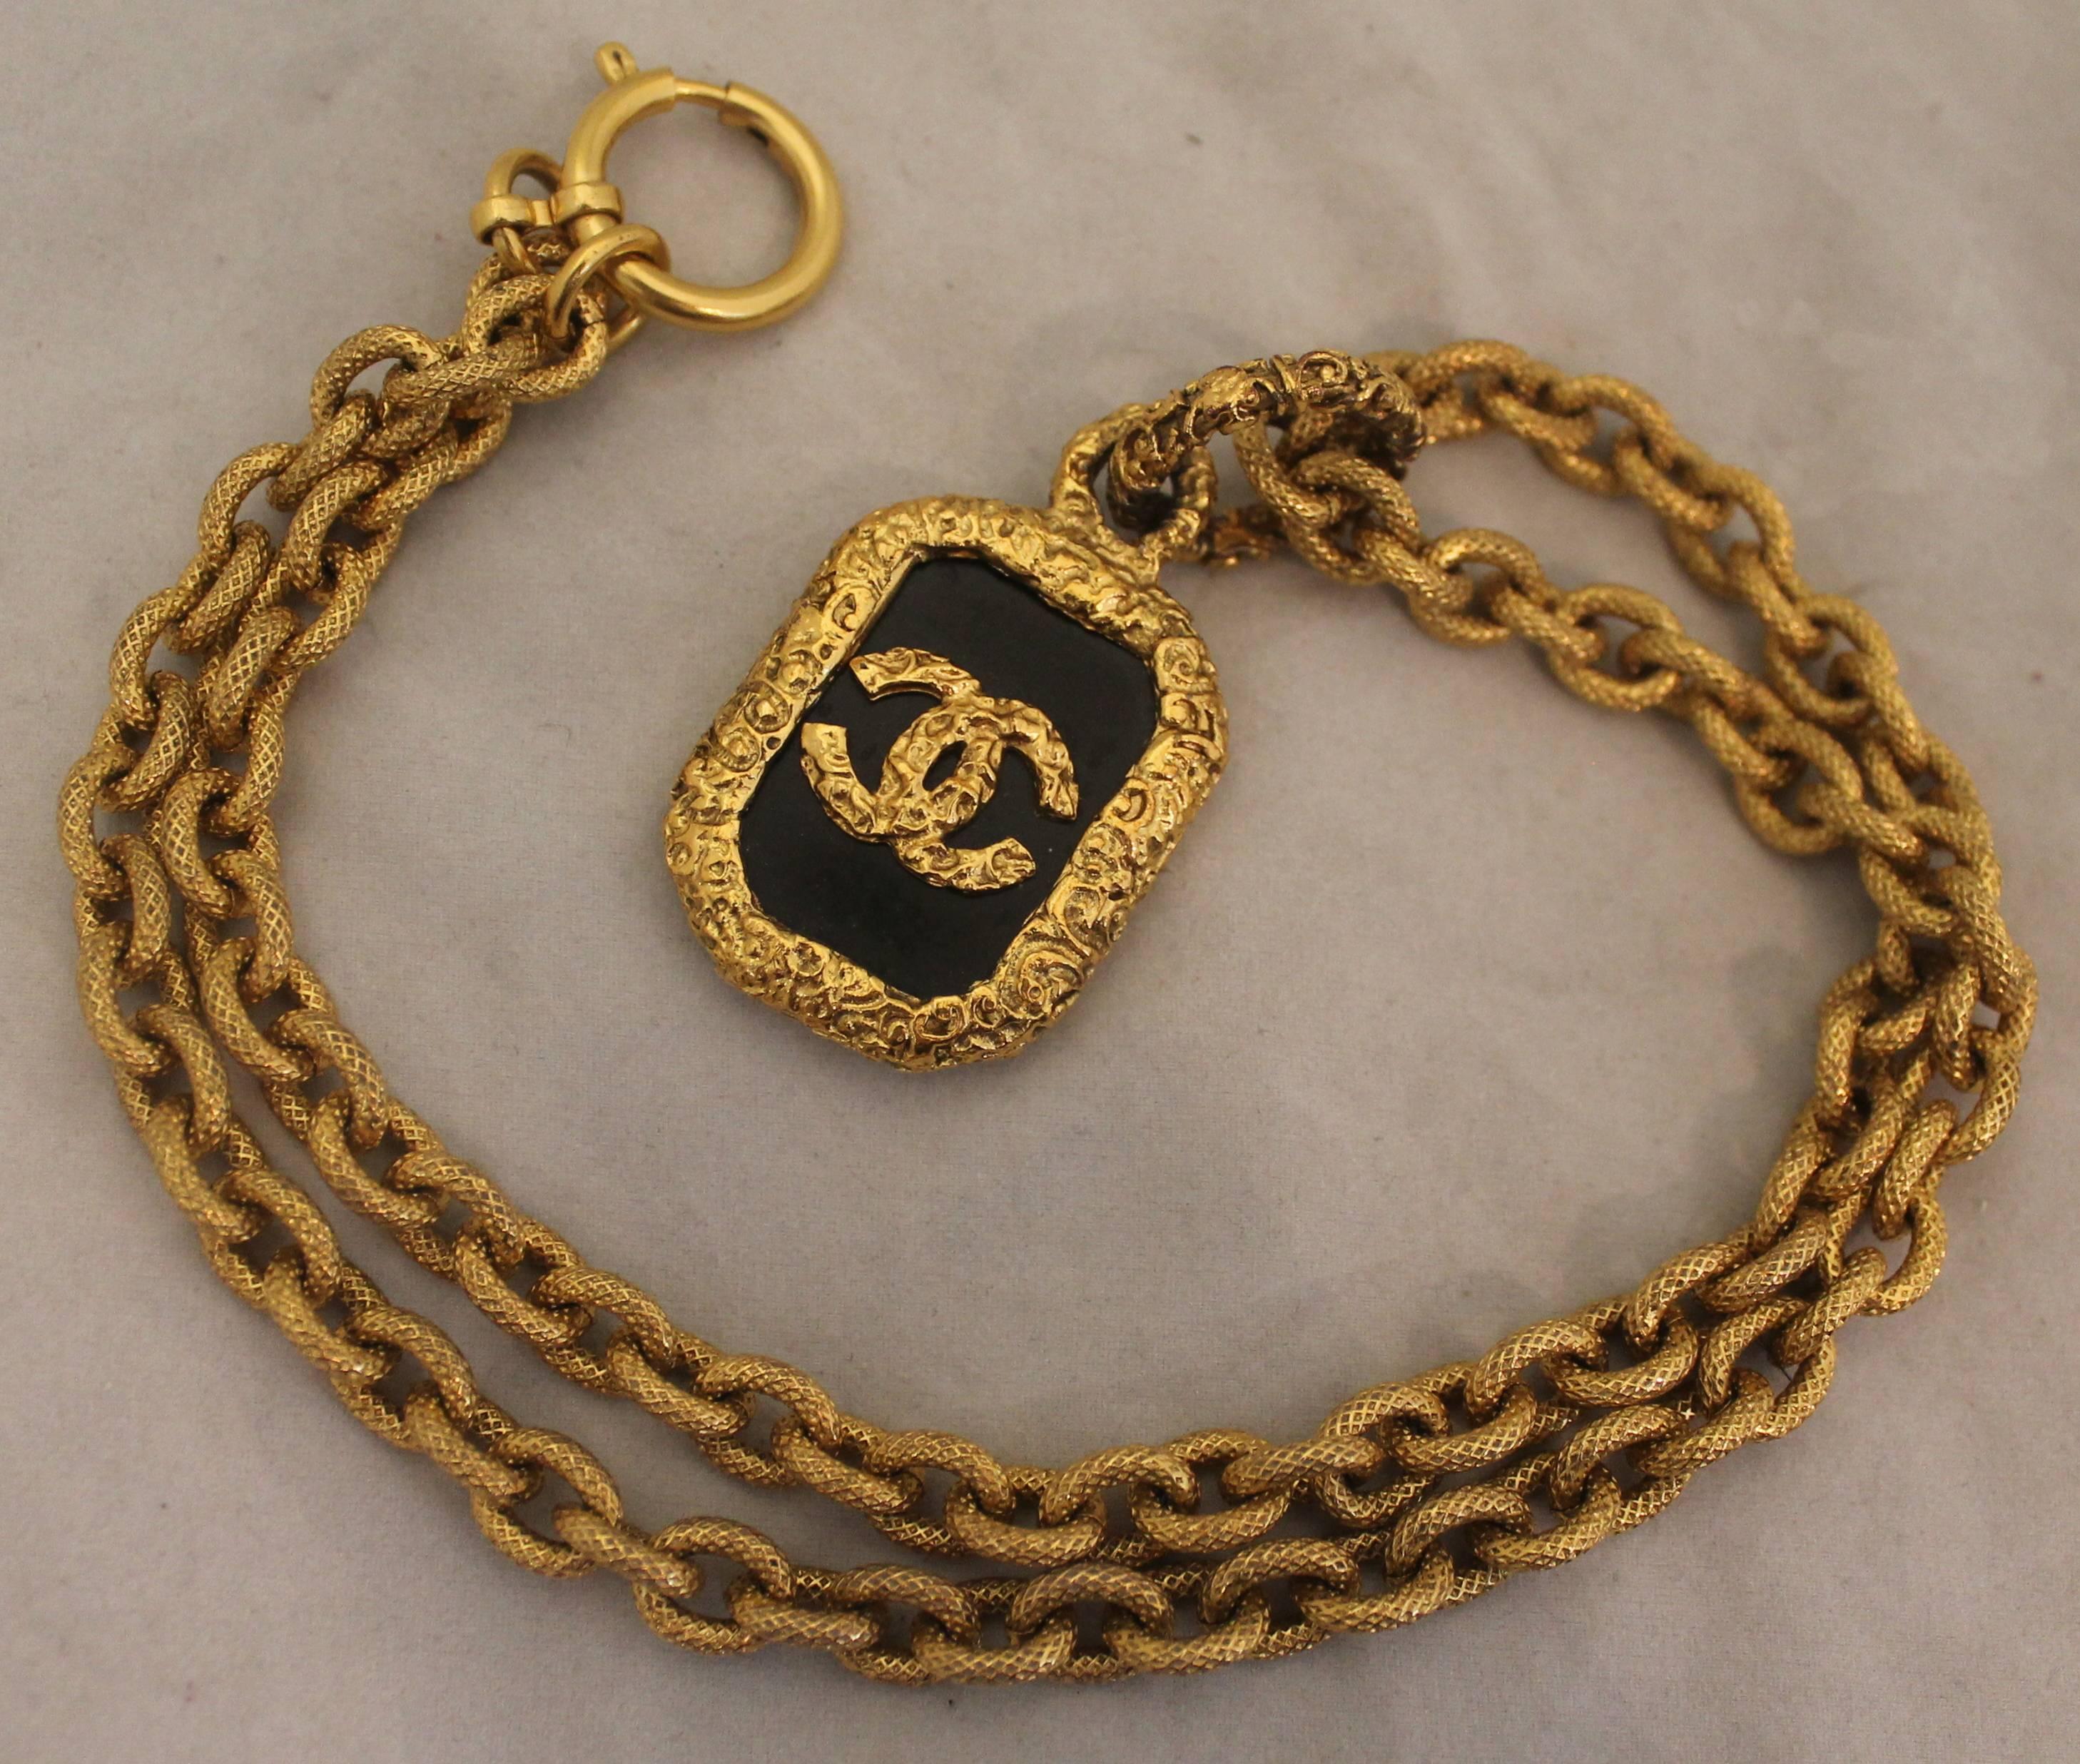 Women's Chanel Goldtone Byzantine Link Necklace with Black Glass Pendant  - Circa 96